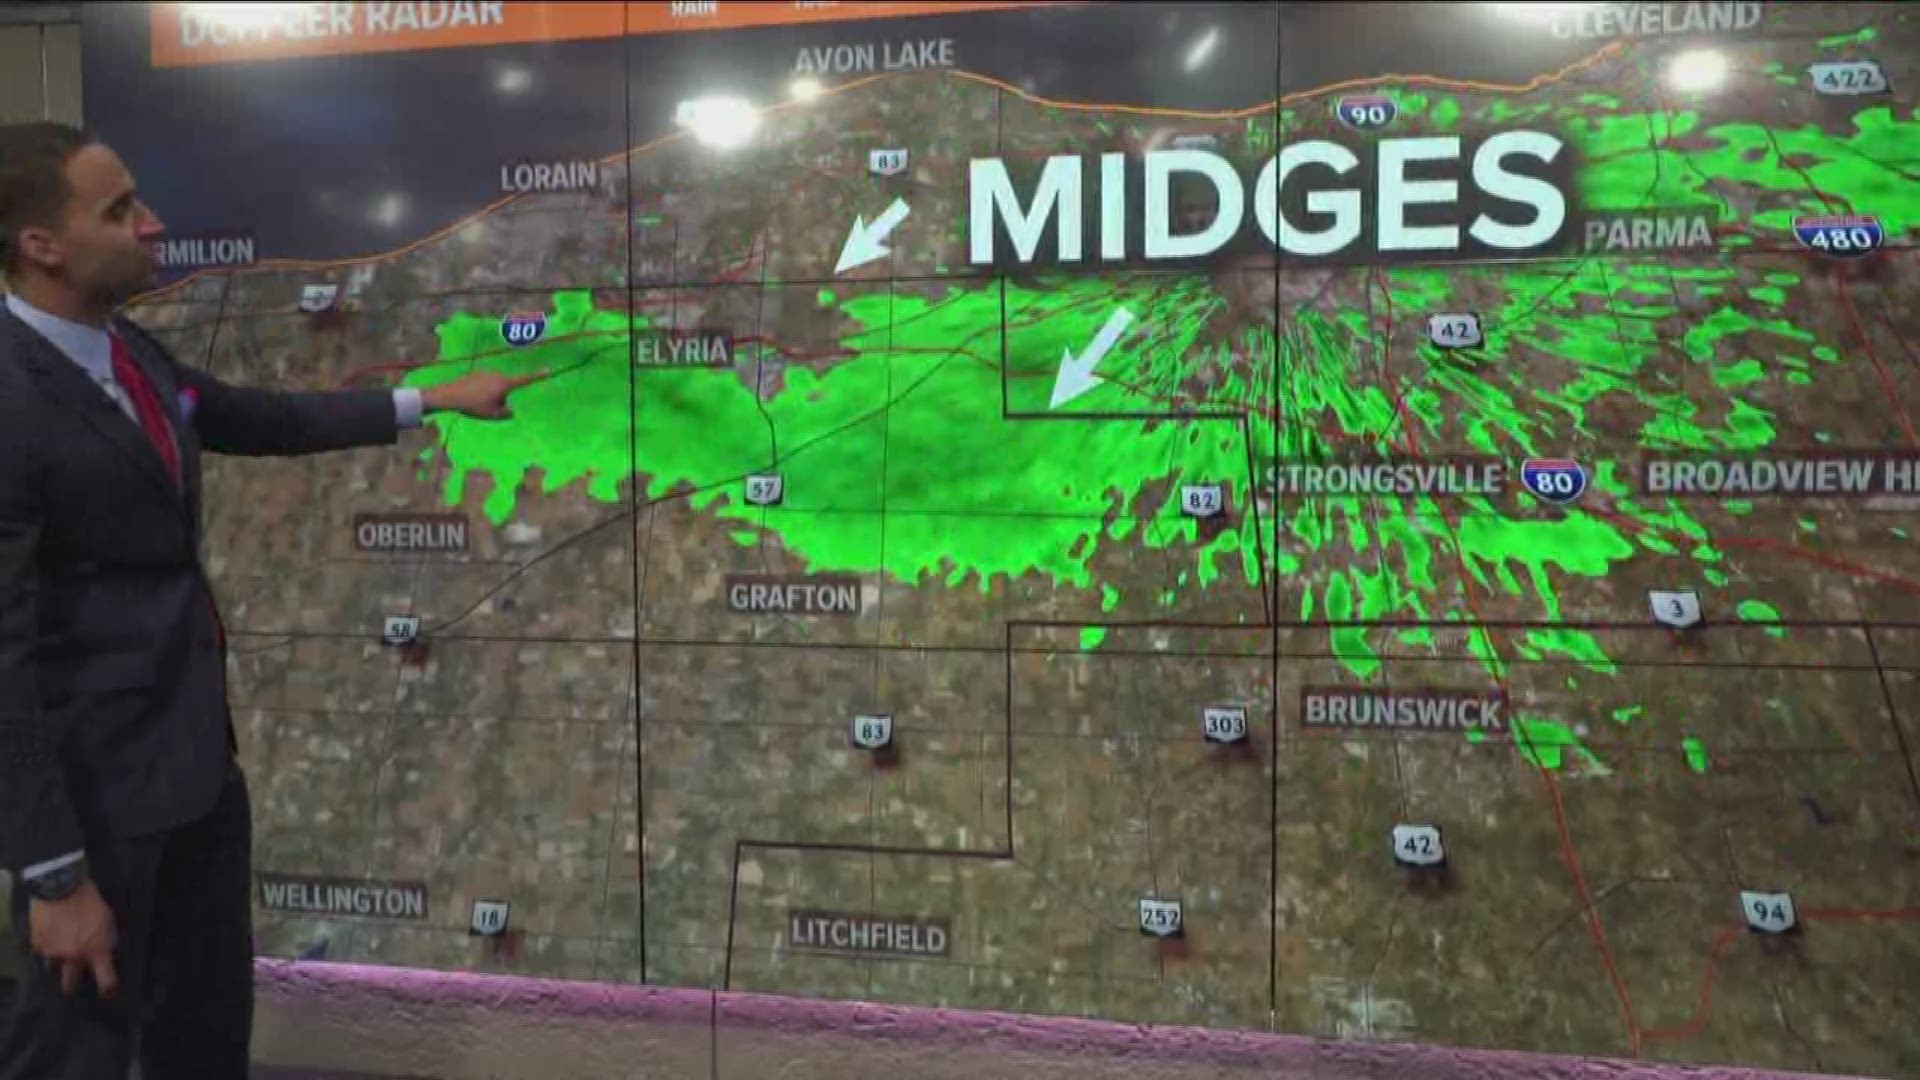 Intense swarm of midges seen on Cleveland radar